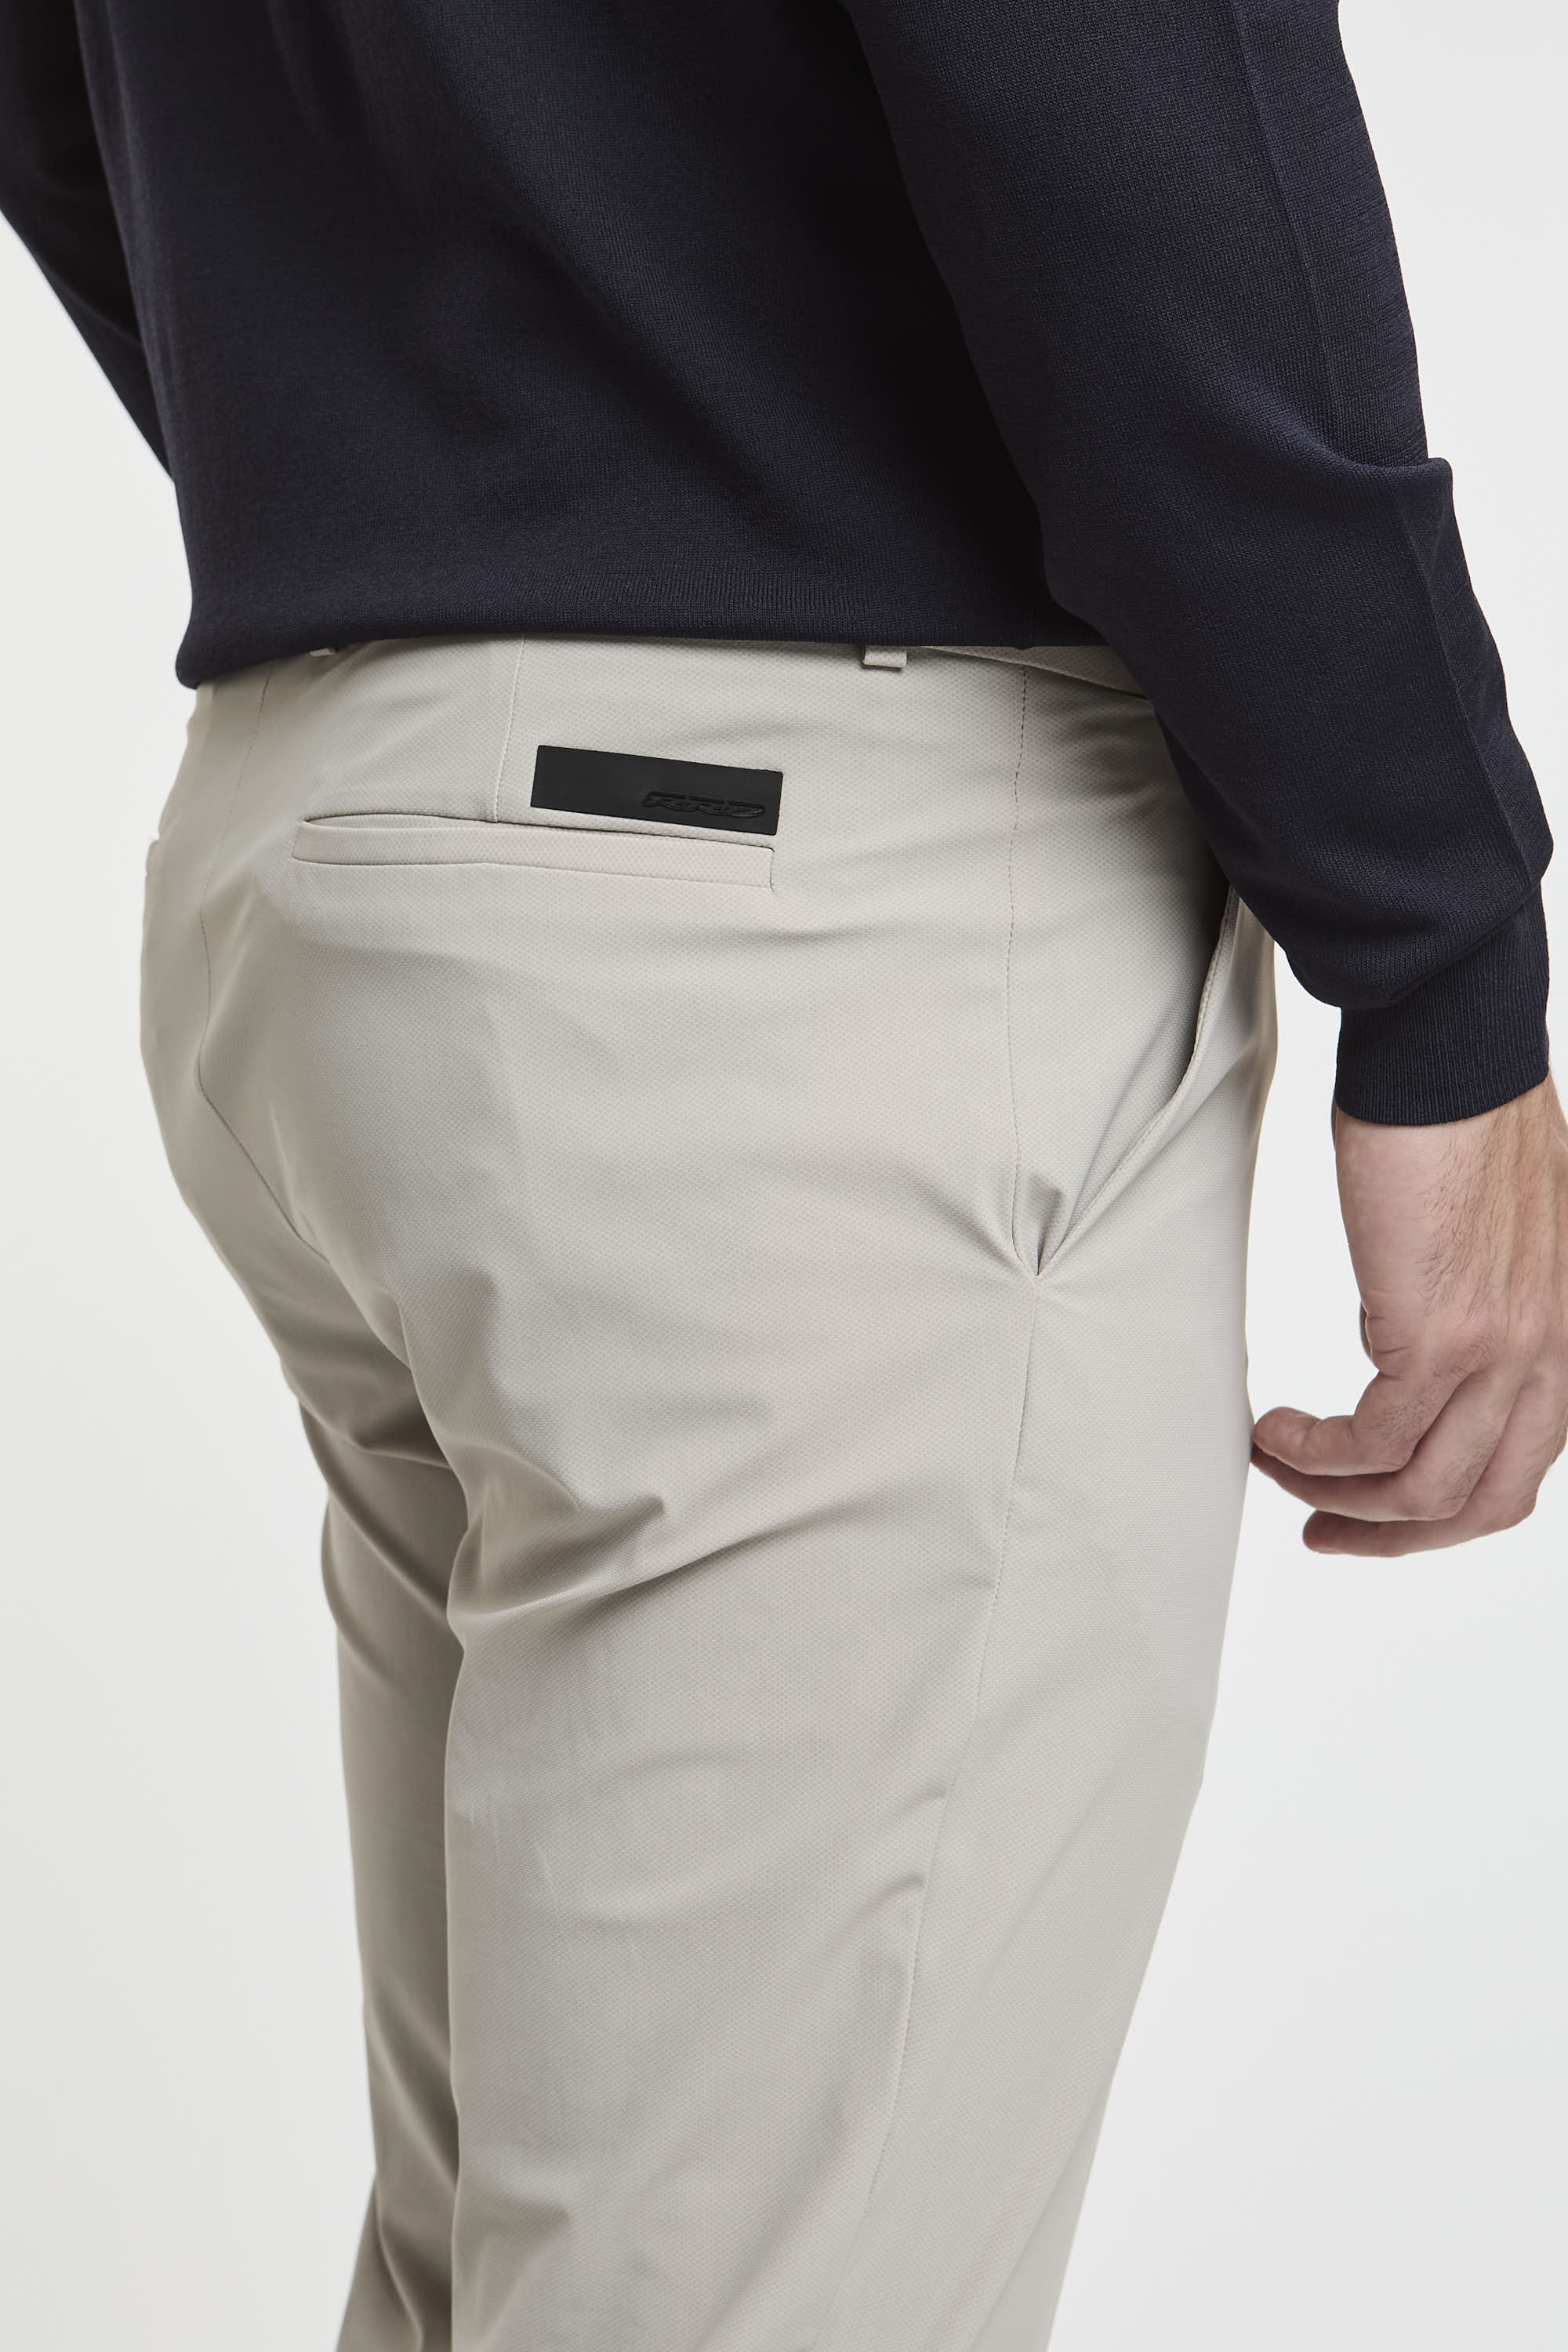 RRD Men's Micro Chino Nylon/Elastane Pants Beige-6